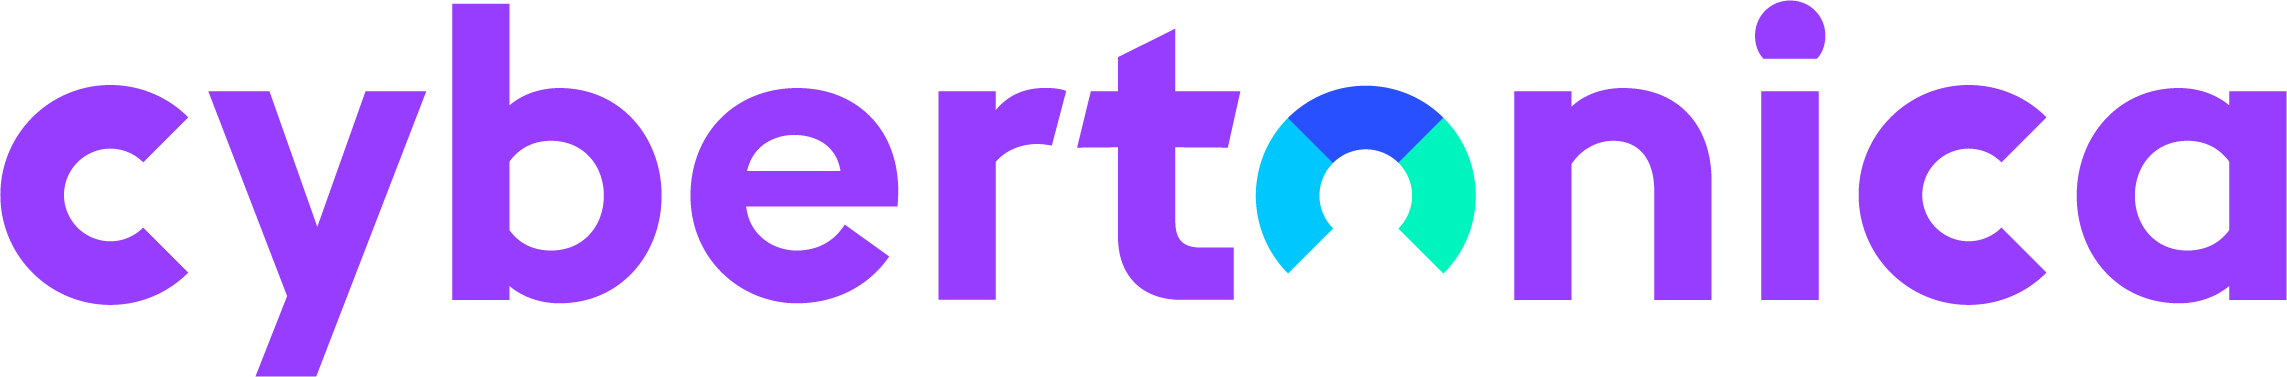 Cybertonica logo